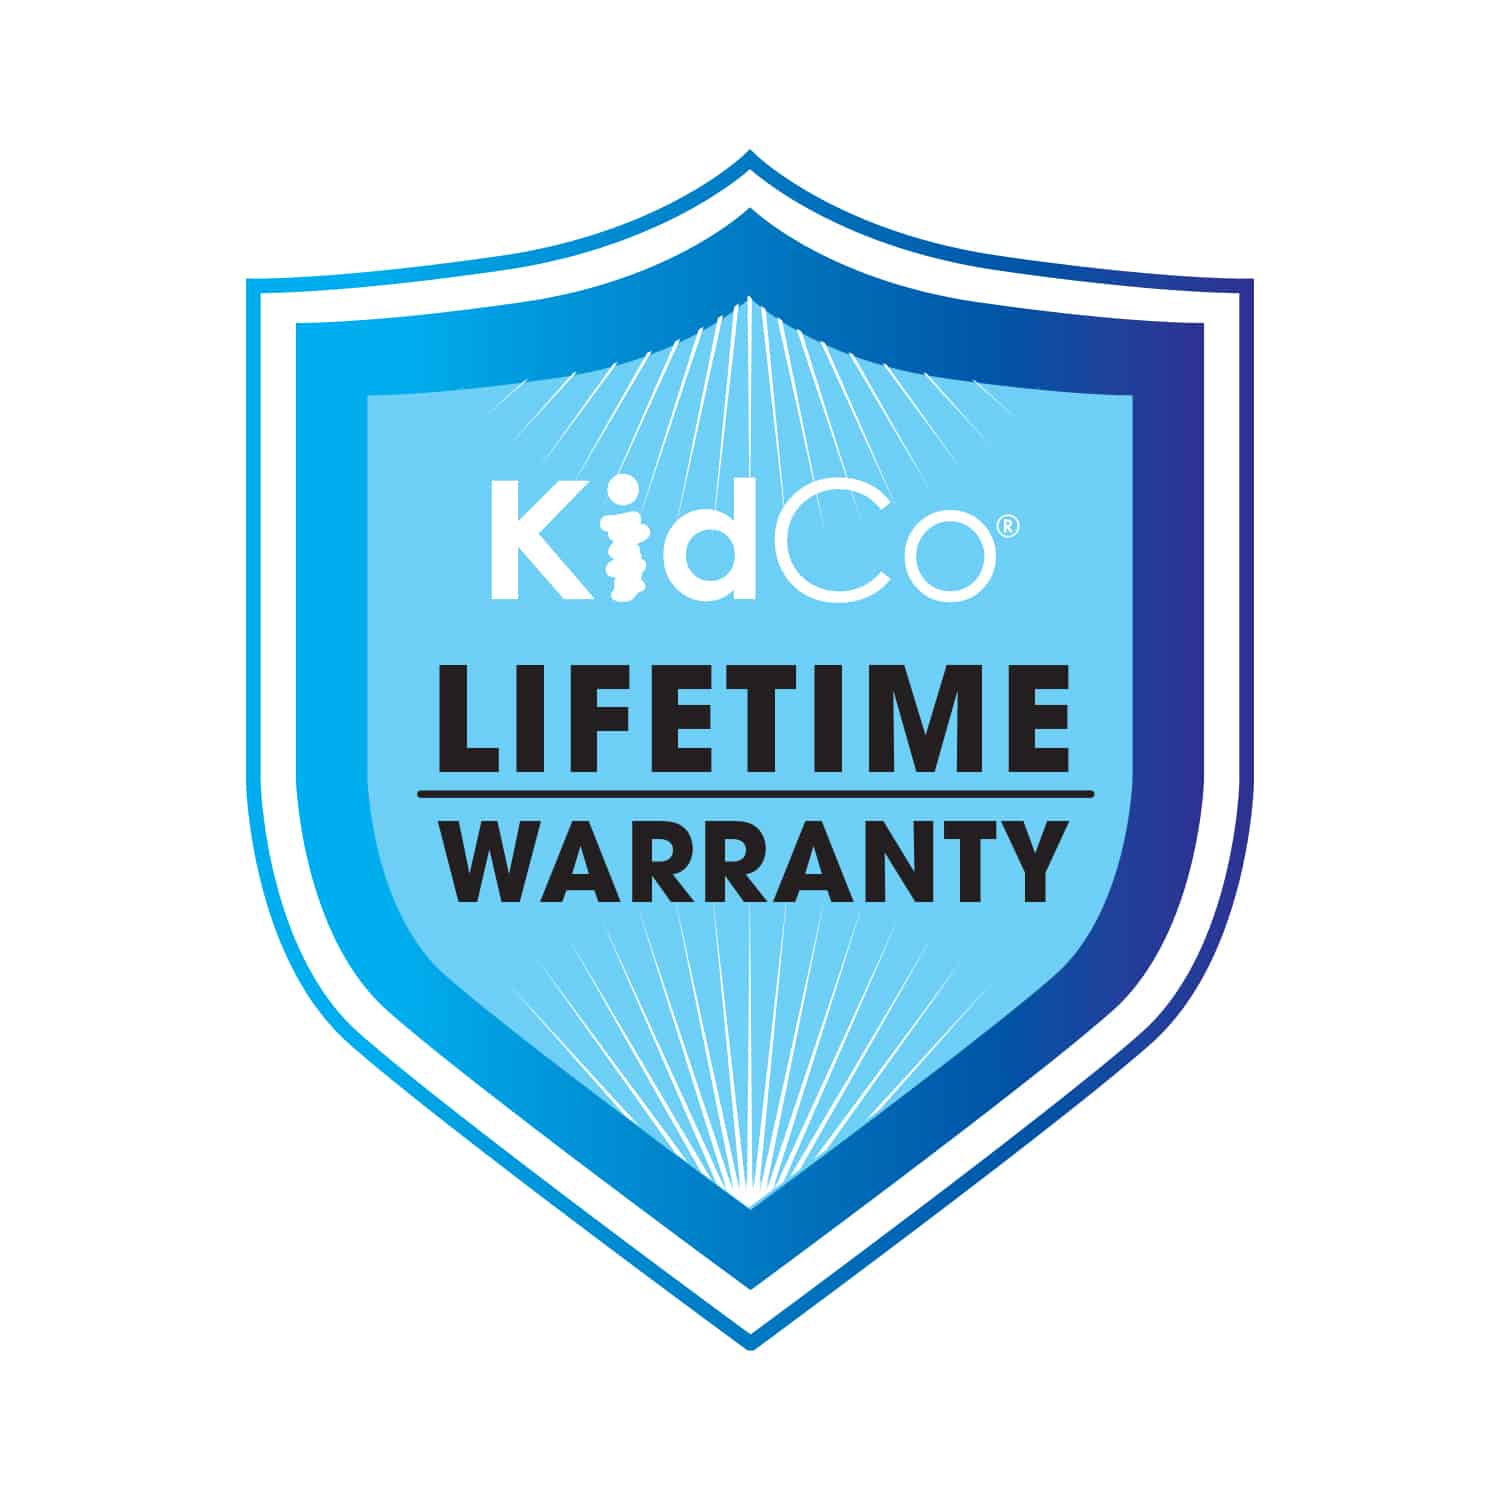 Kidco Soft Corner Protectors, Clear - 4 pack